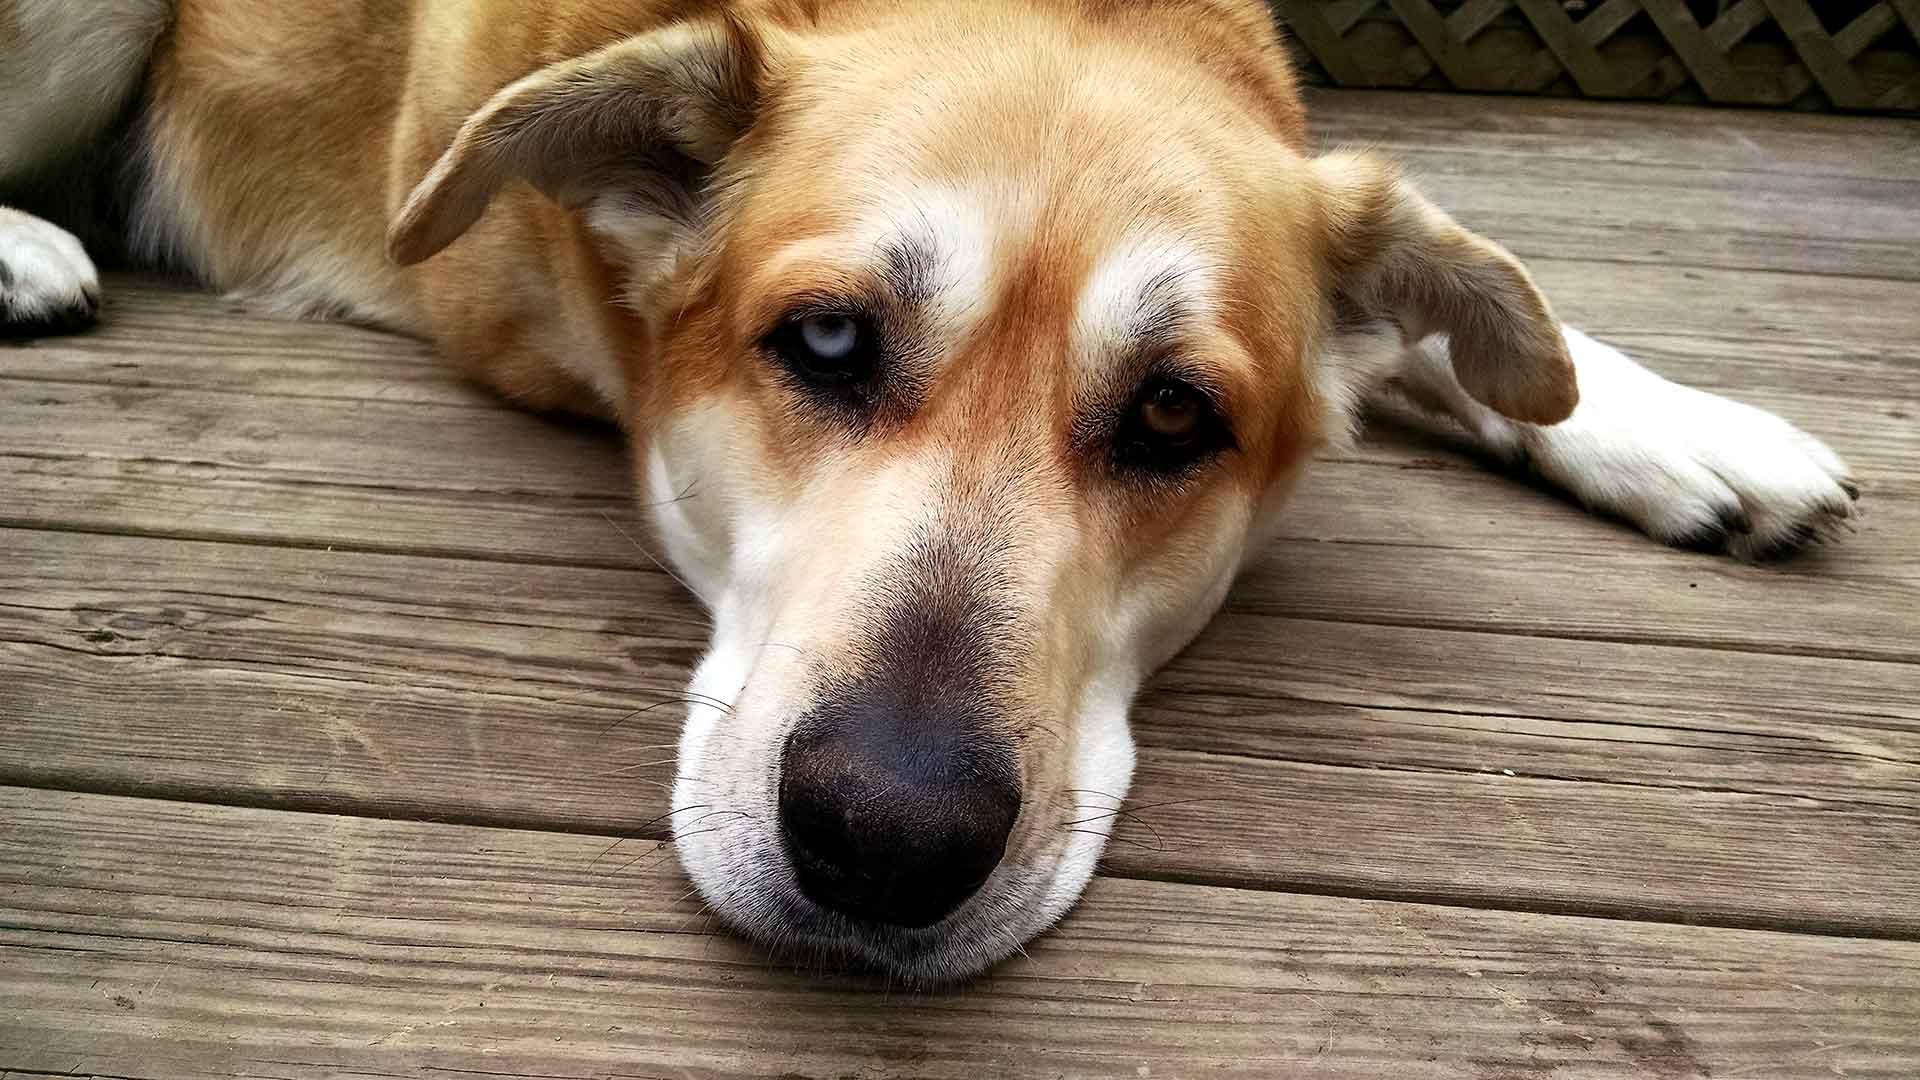 Dog on porch